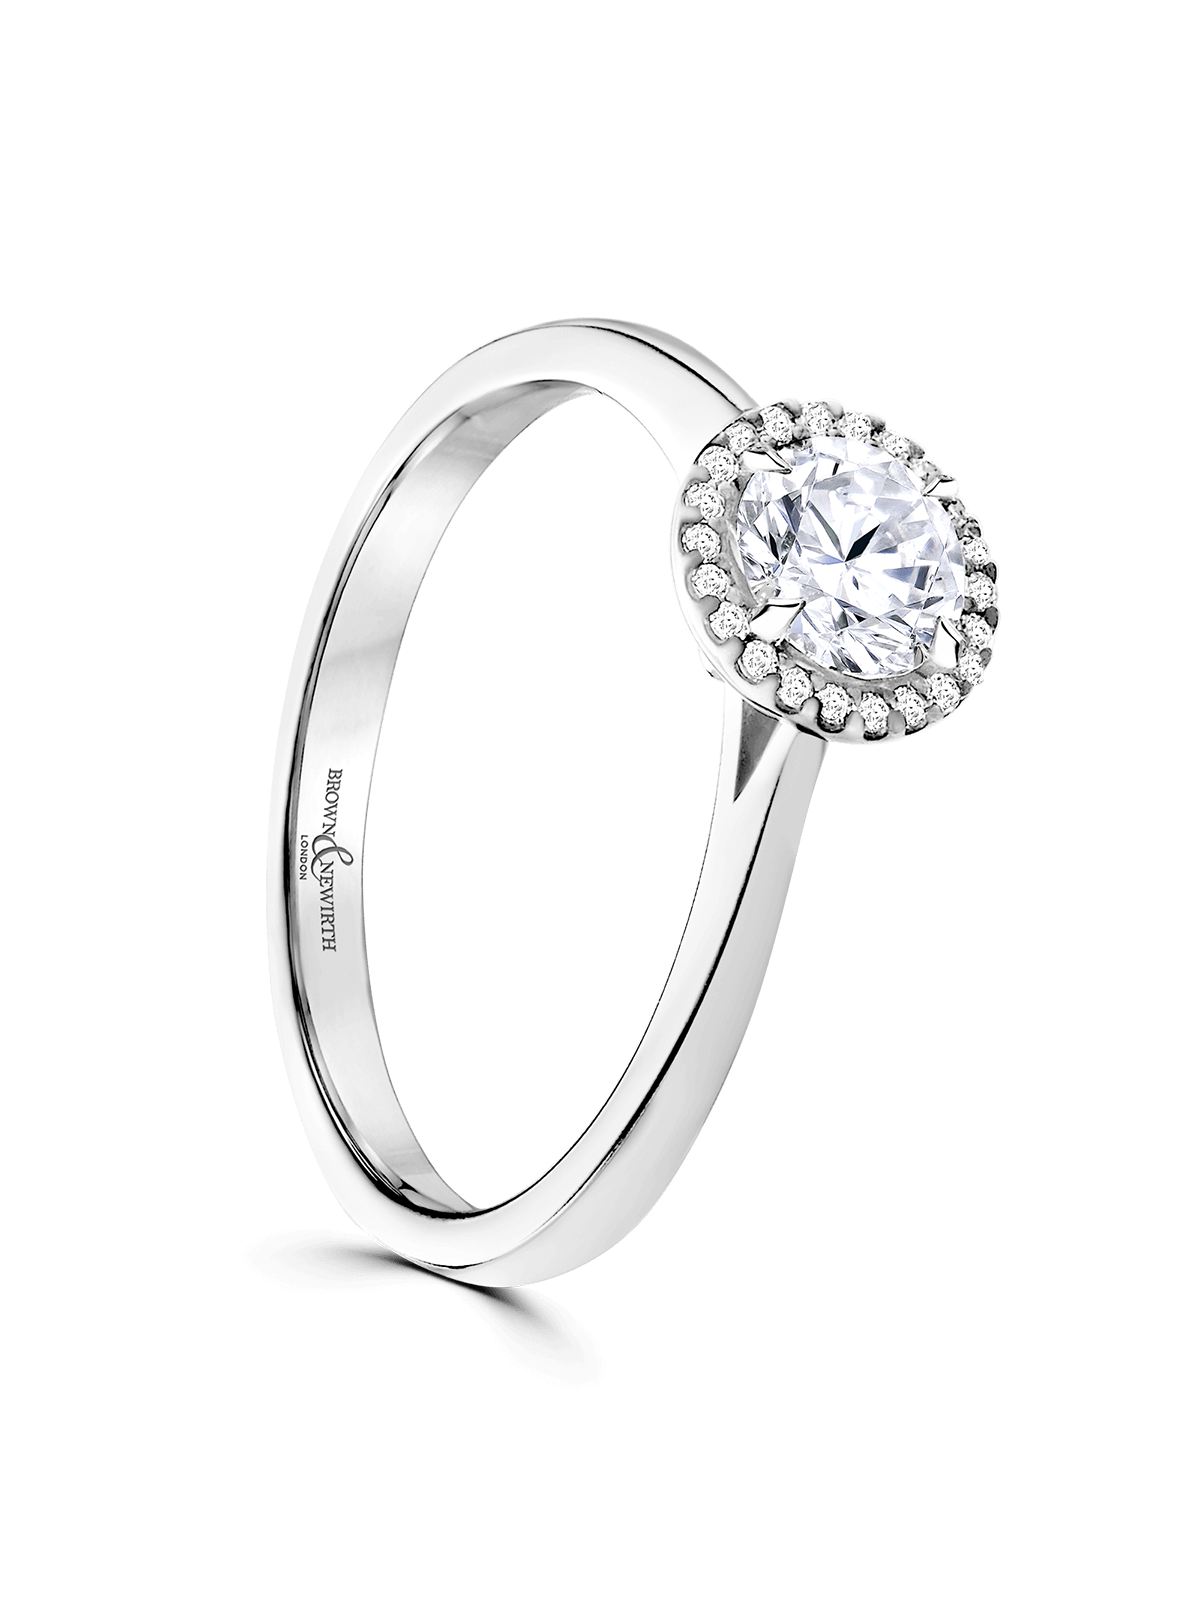 Brown & Newirth Celeste 0.70ct Brilliant Cut Certificated Diamond Halo Engagement Ring in Platinum